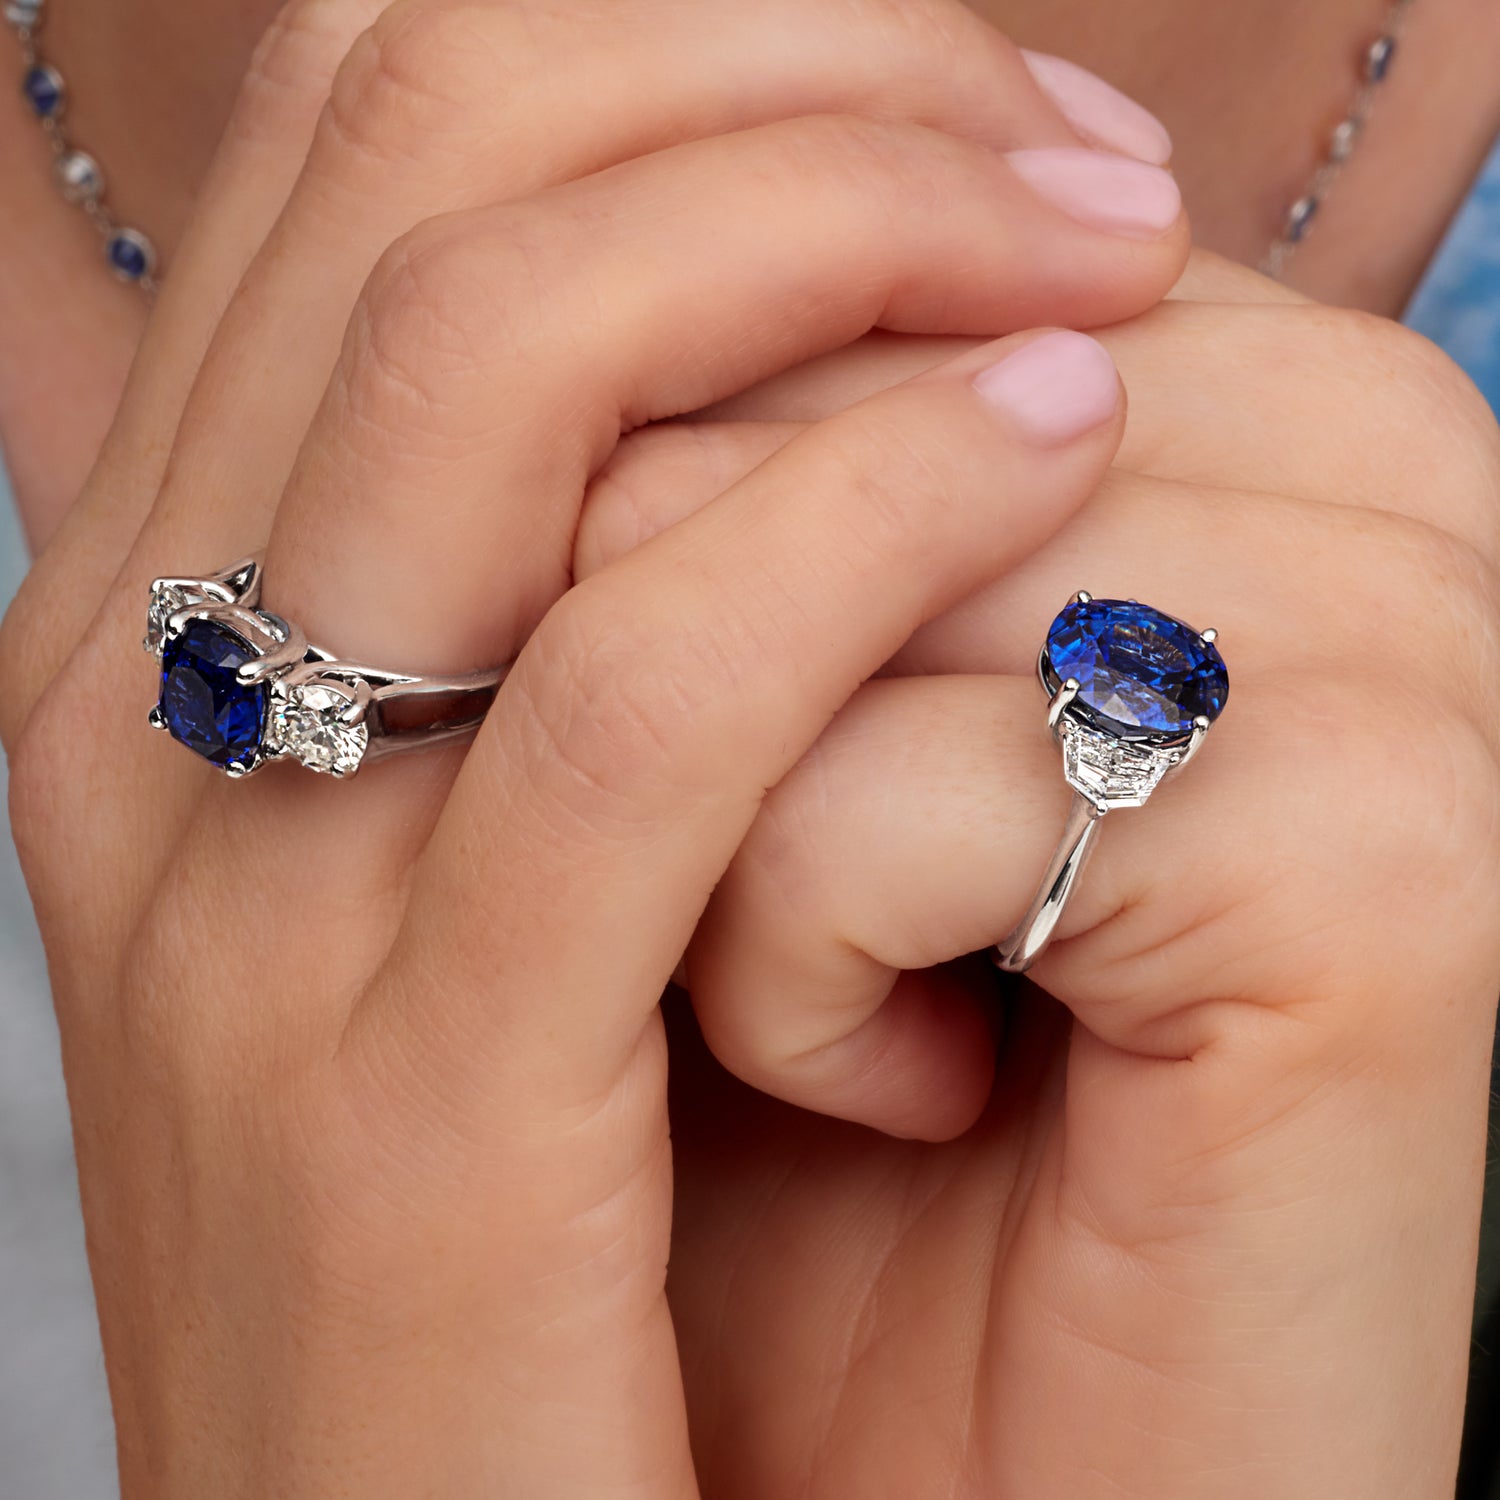 8.93 CT. Oval Cut Blue Sapphire and Half Moon Diamond Three Stone Ring in Platinum